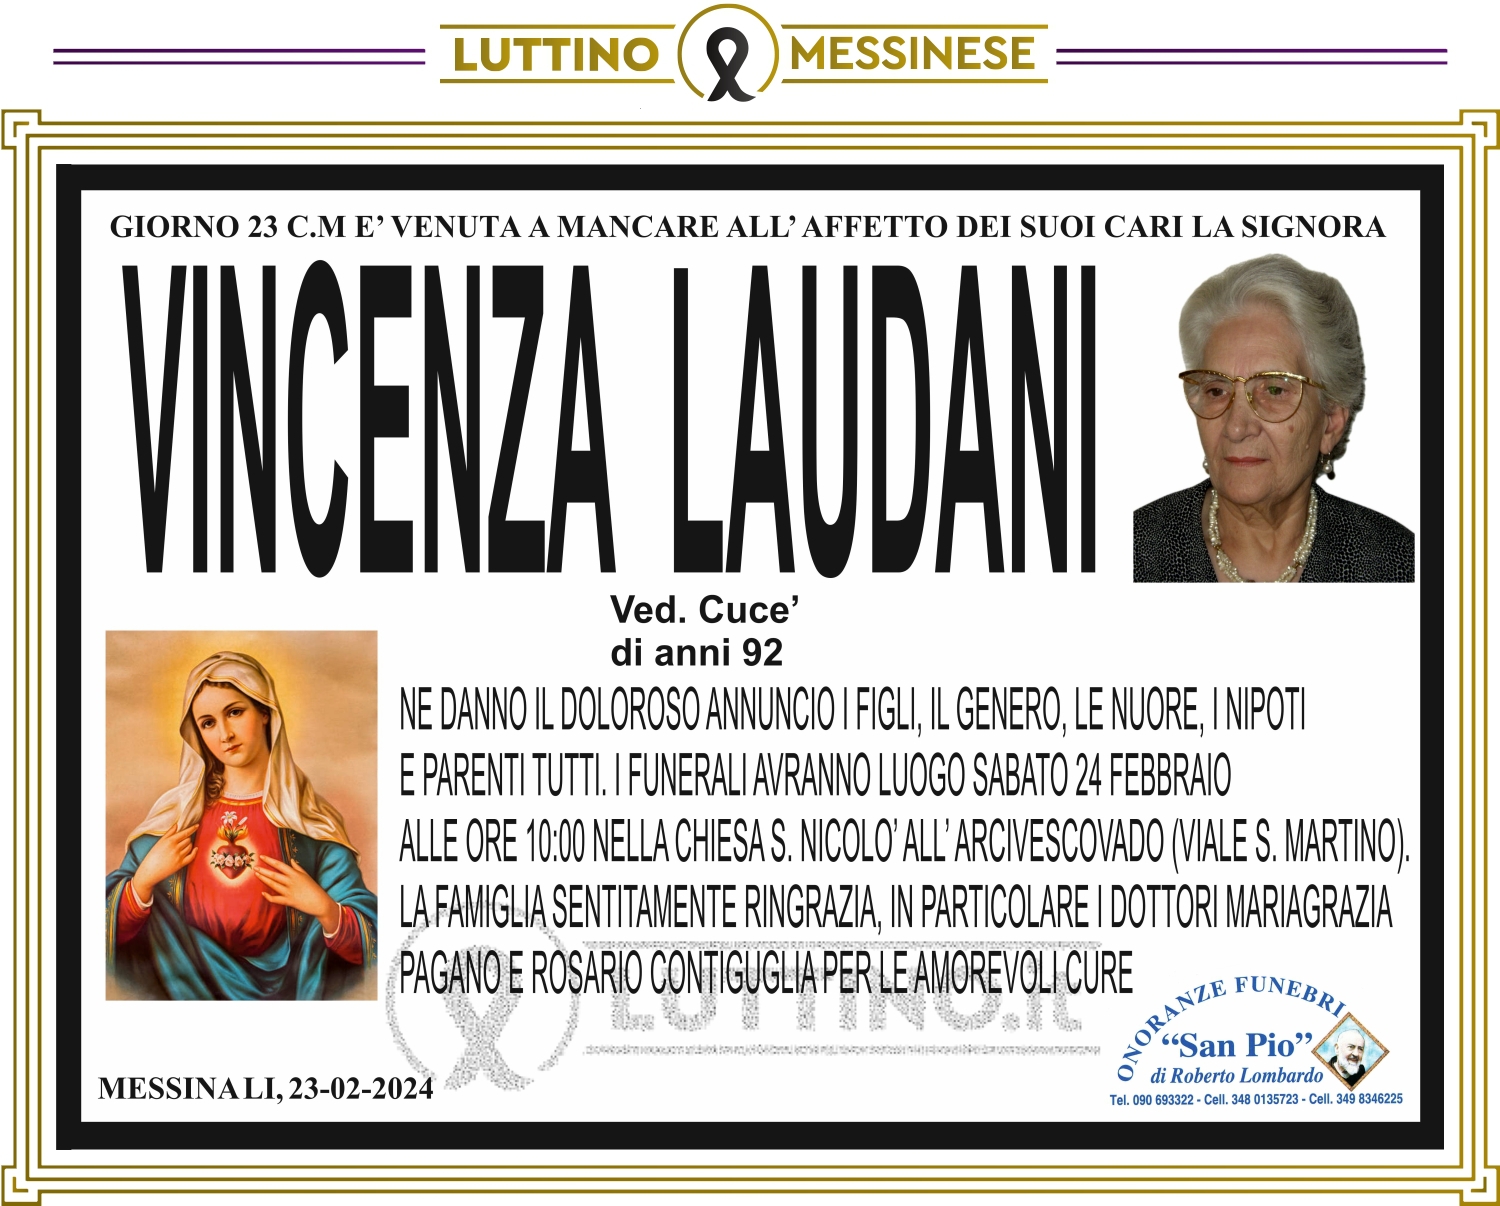 Vincenza Laudani